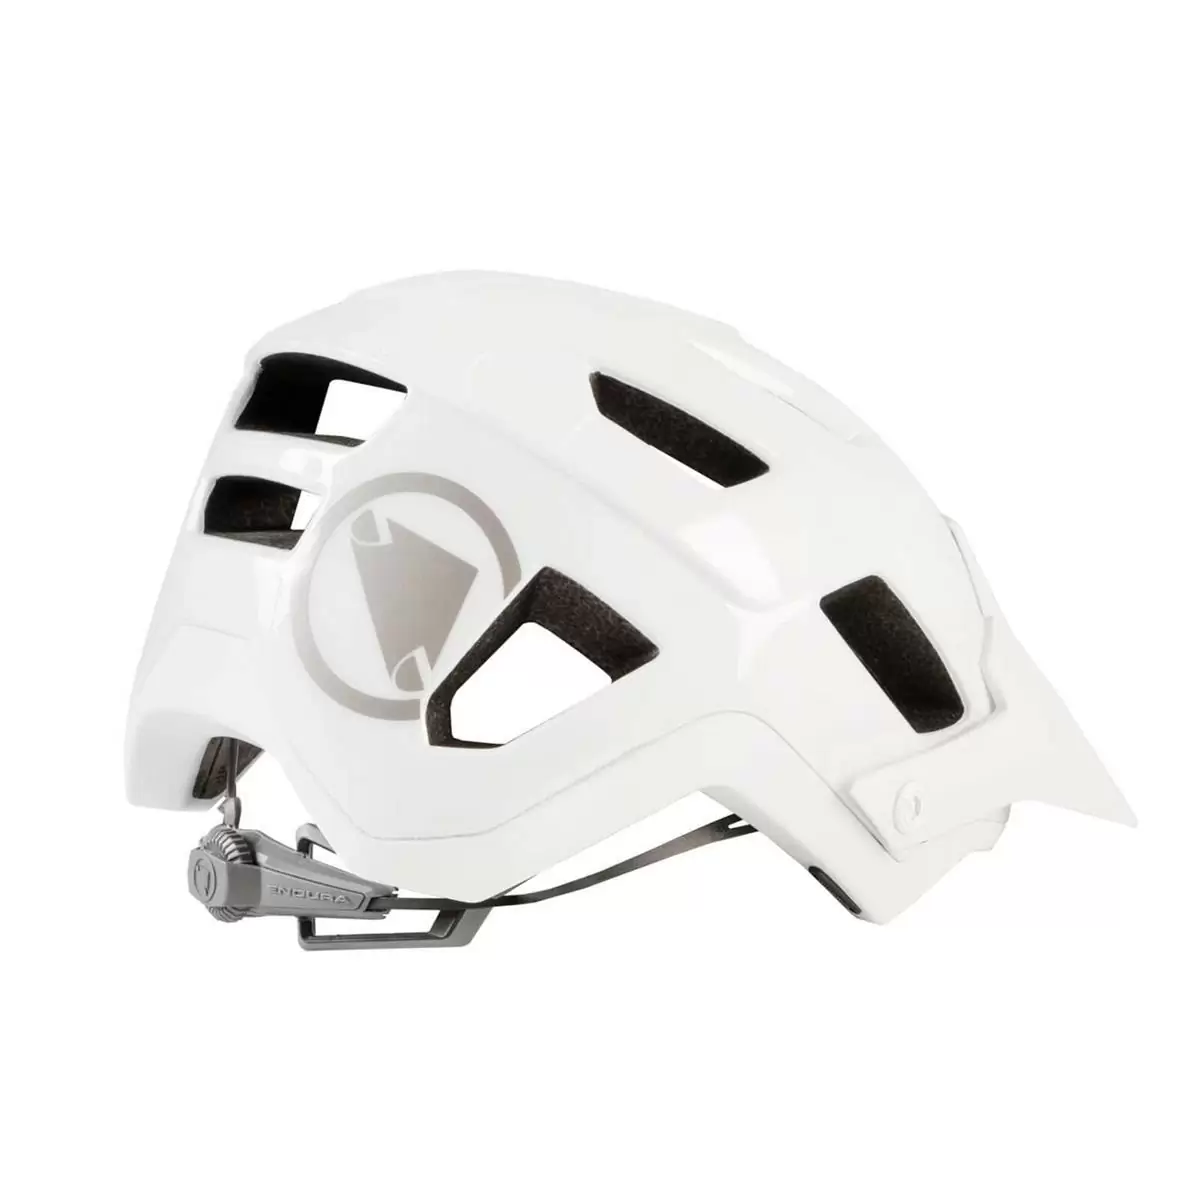 Hummvee Plus MTB Enduro Helmet White Size S/M (51-56cm) #1